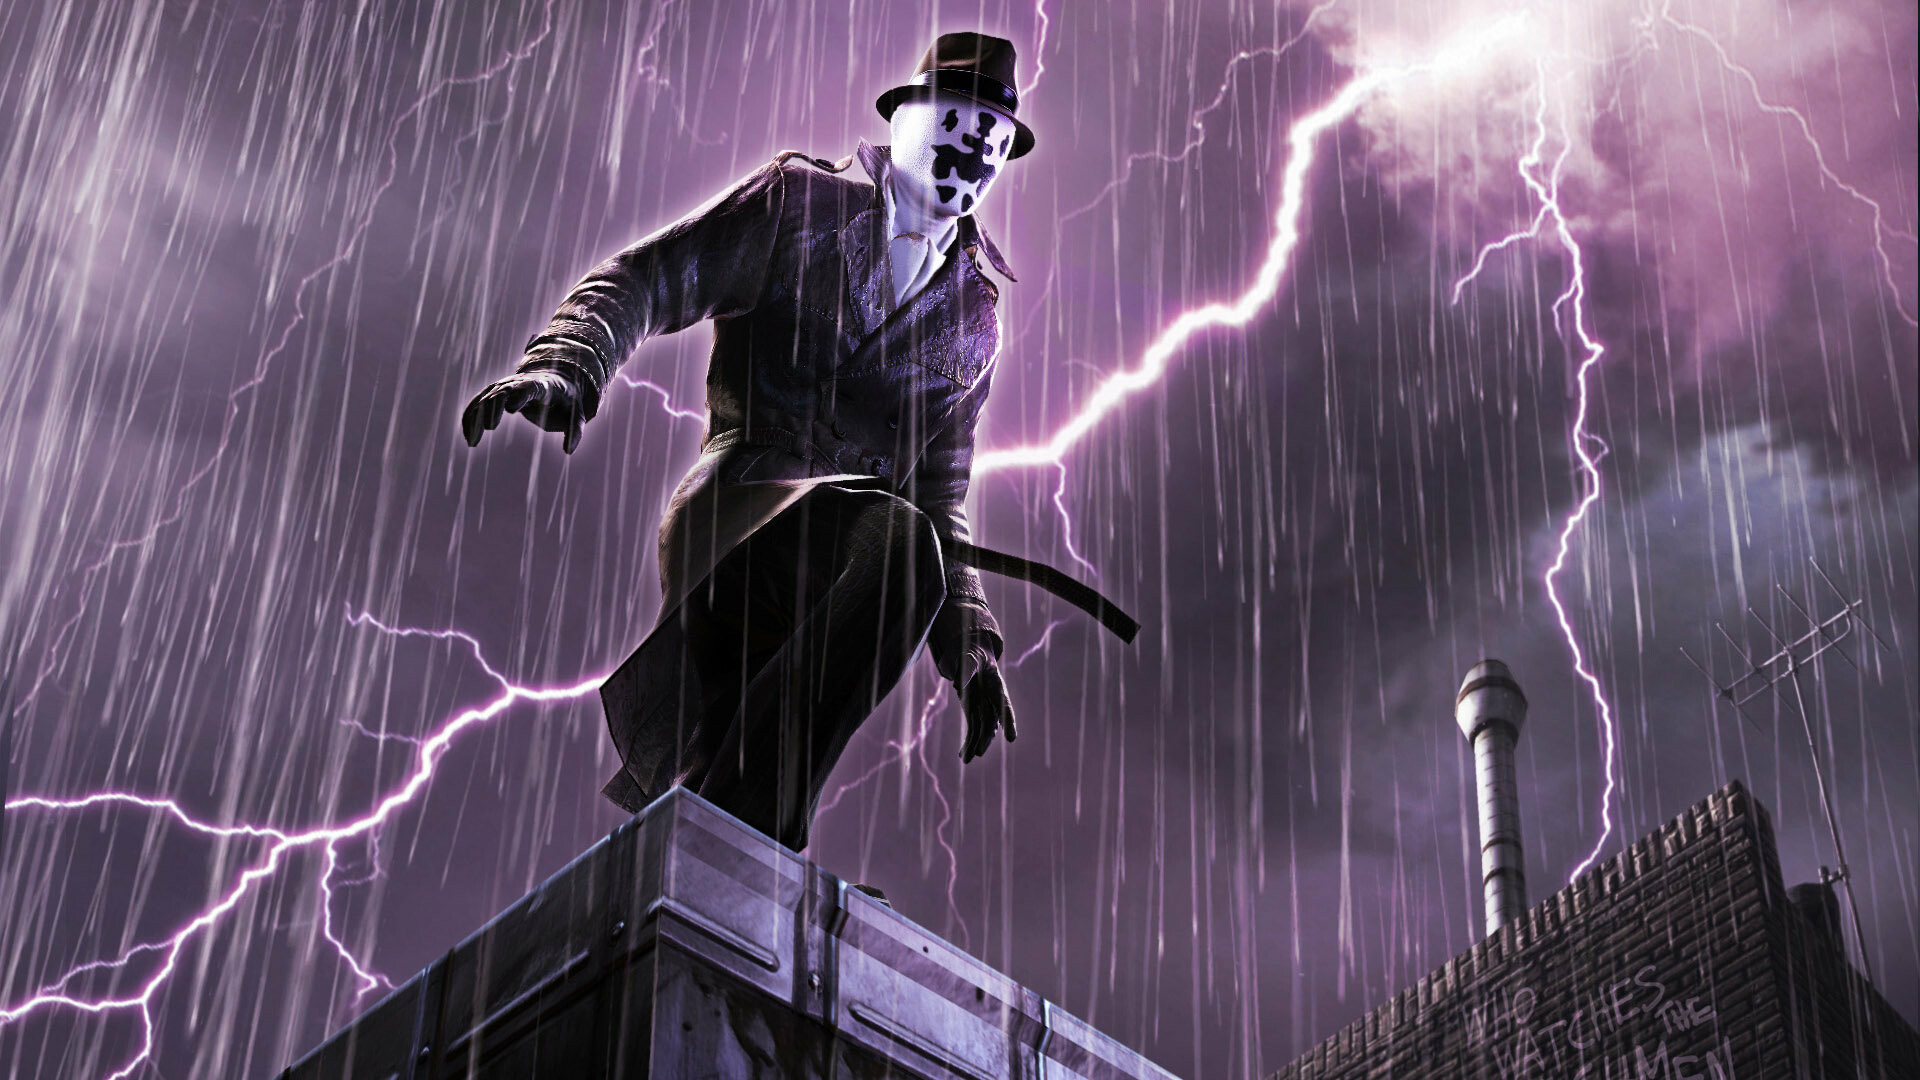 Rorschach (Watchmen): Walter Joseph Kovacs, a violent and ruthless vigilante. 1920x1080 Full HD Background.